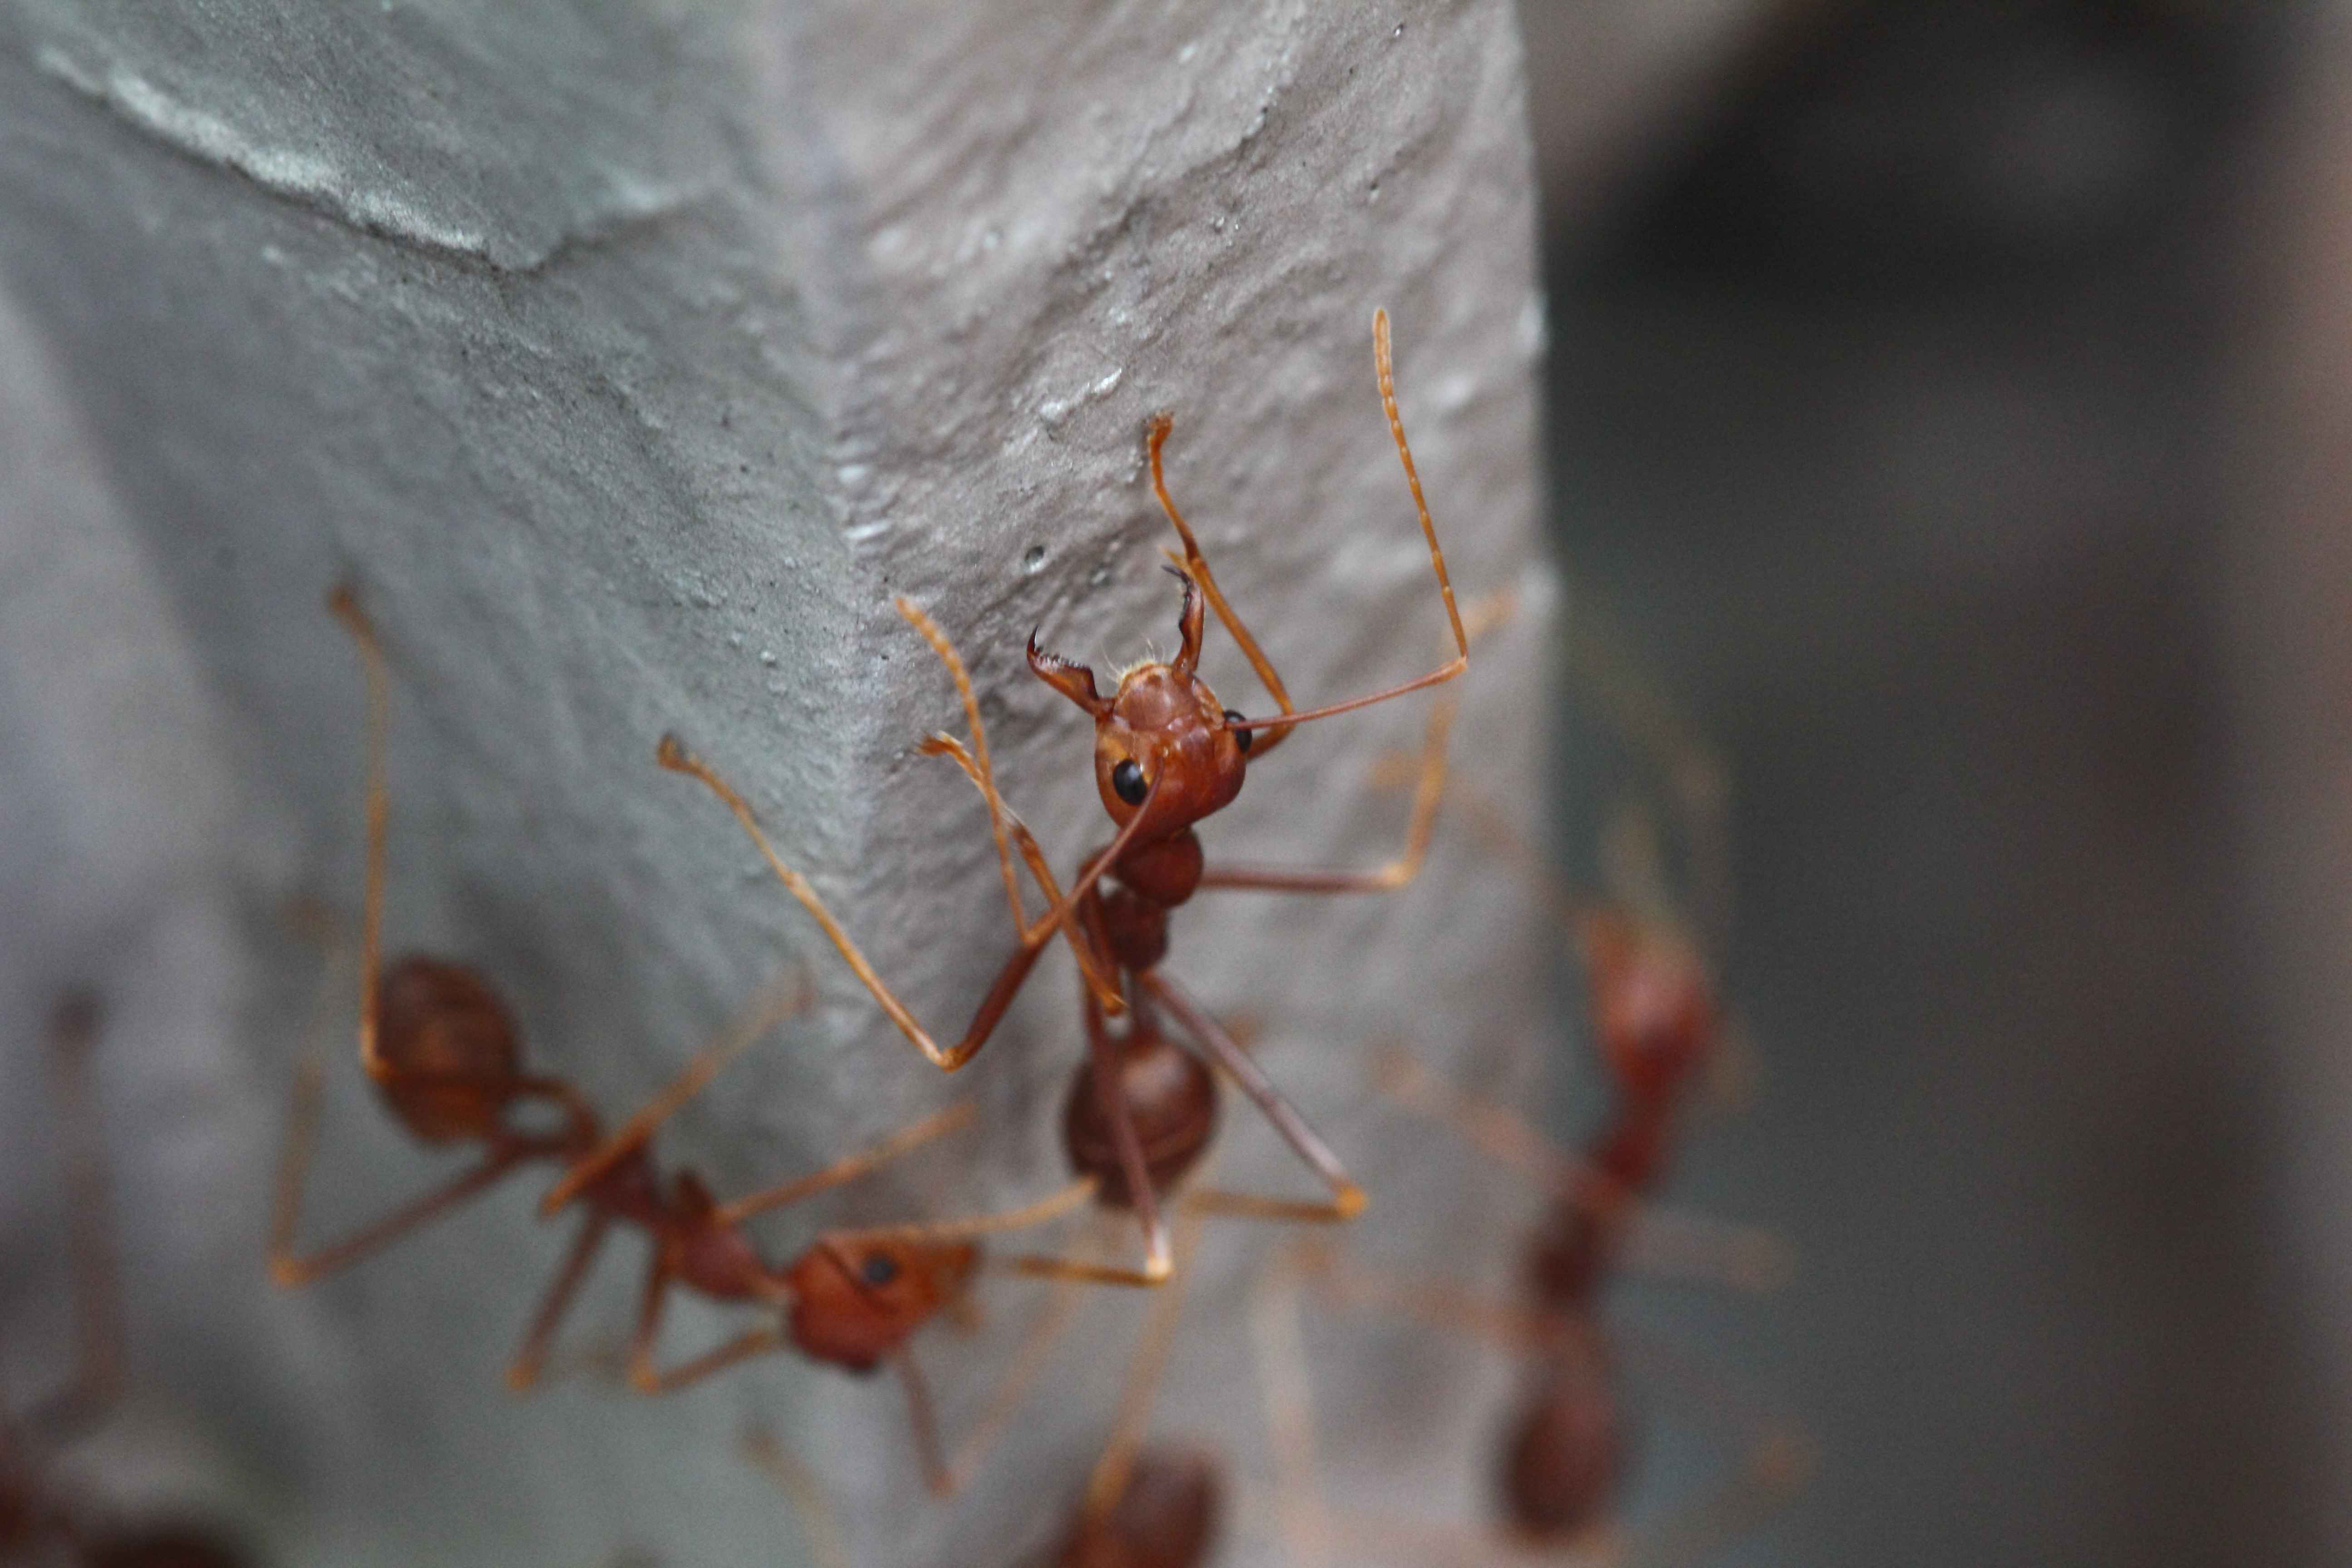 Tick, Flea and Ant Control